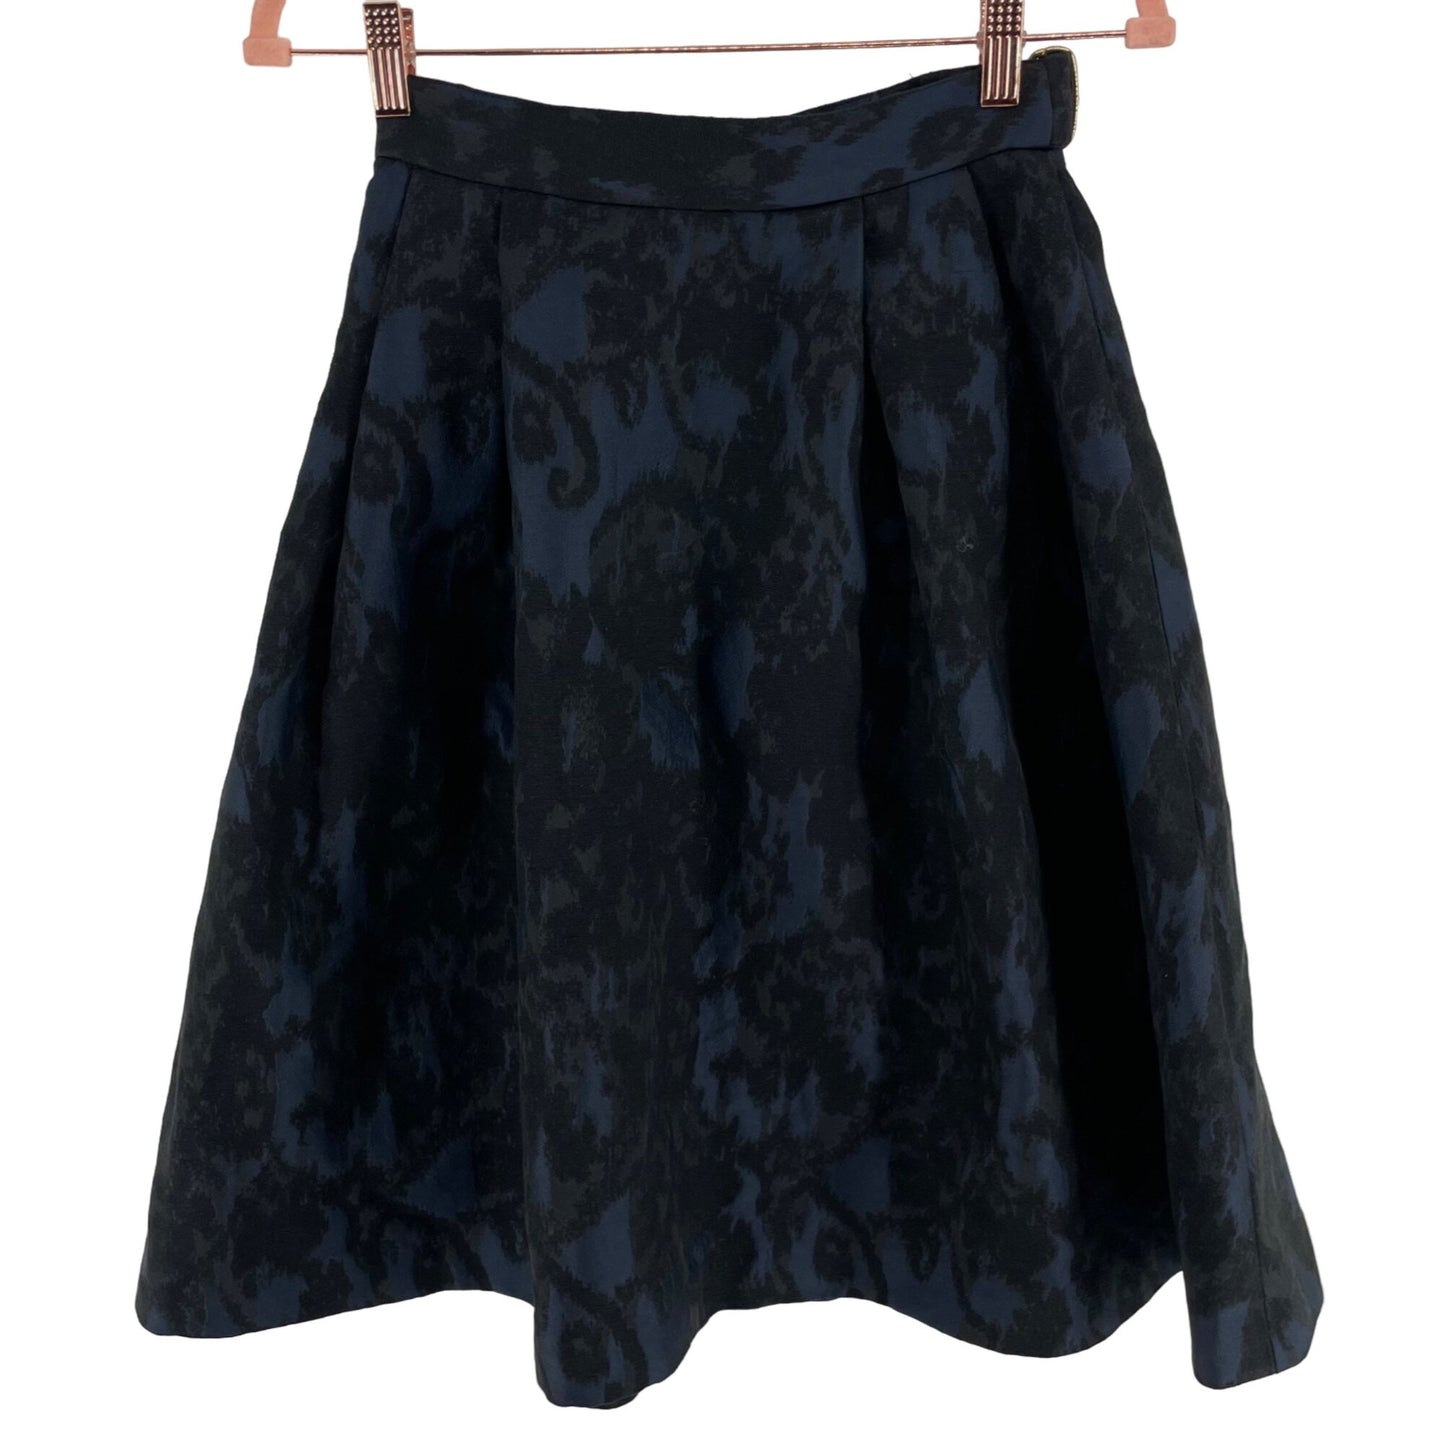 H&M Women's Size 4 Black & Navy Pleated A-Line Formal Midi Skirt